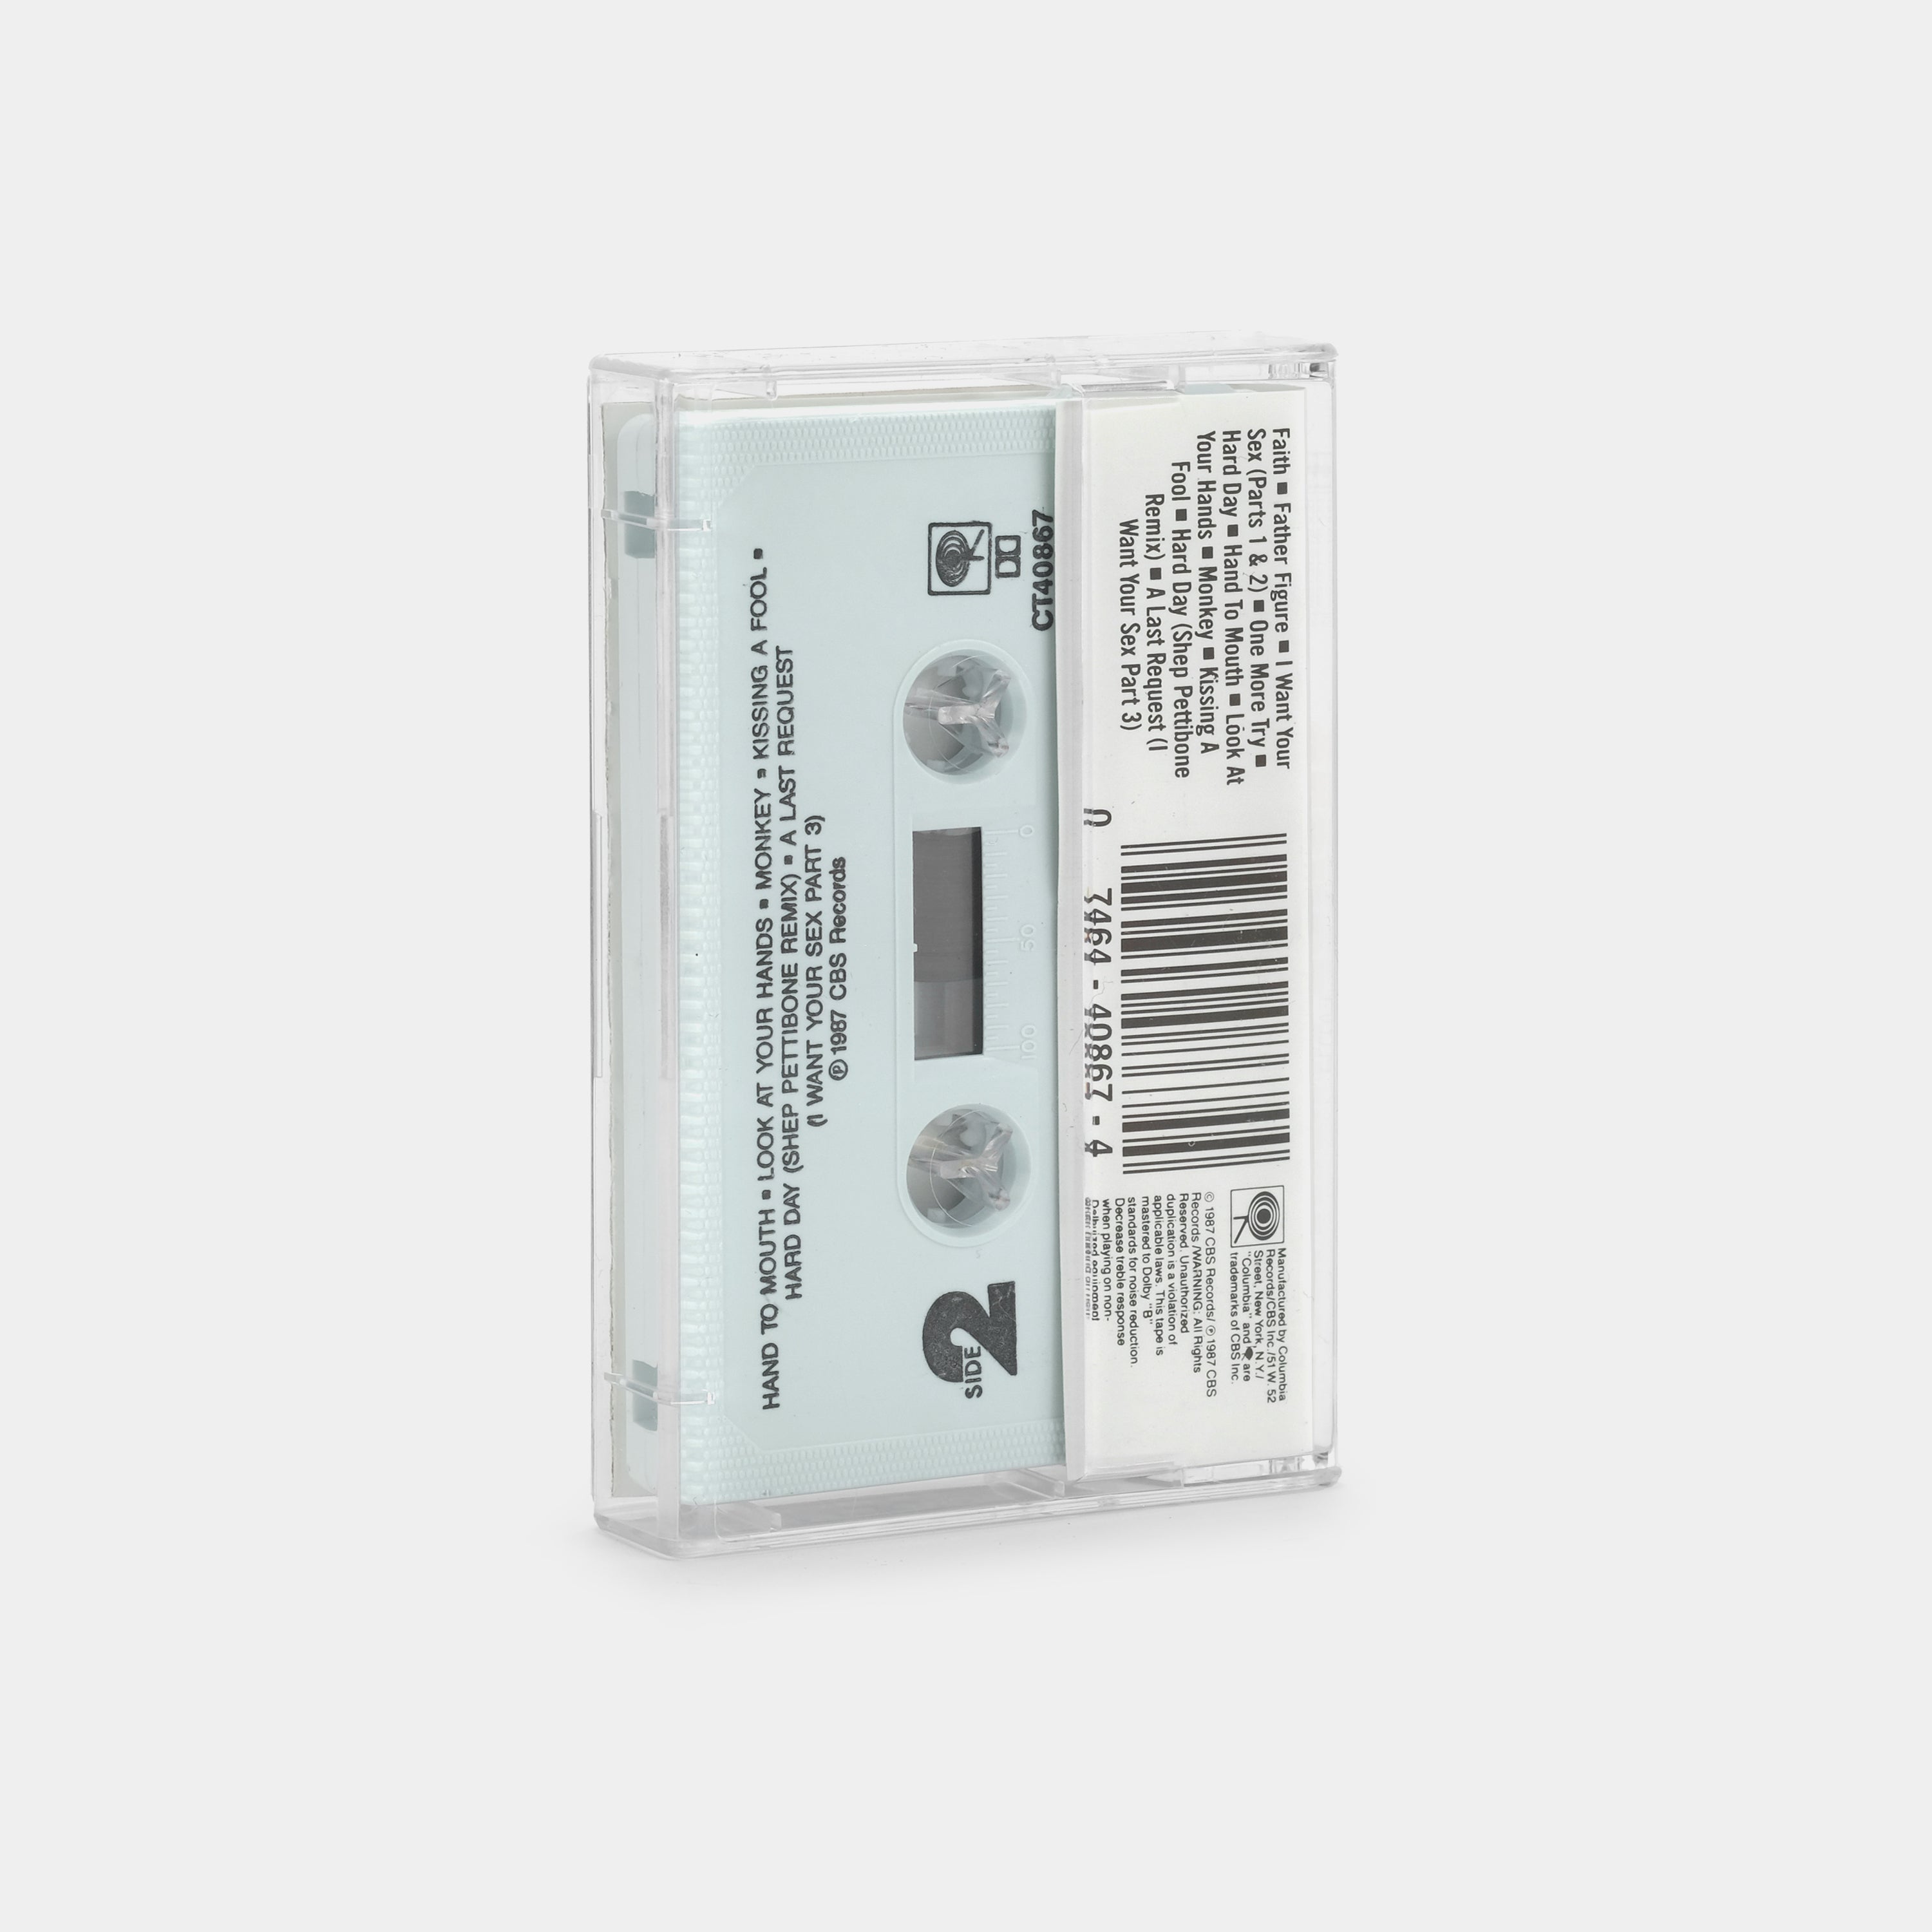 George Michael - Faith Cassette Tape